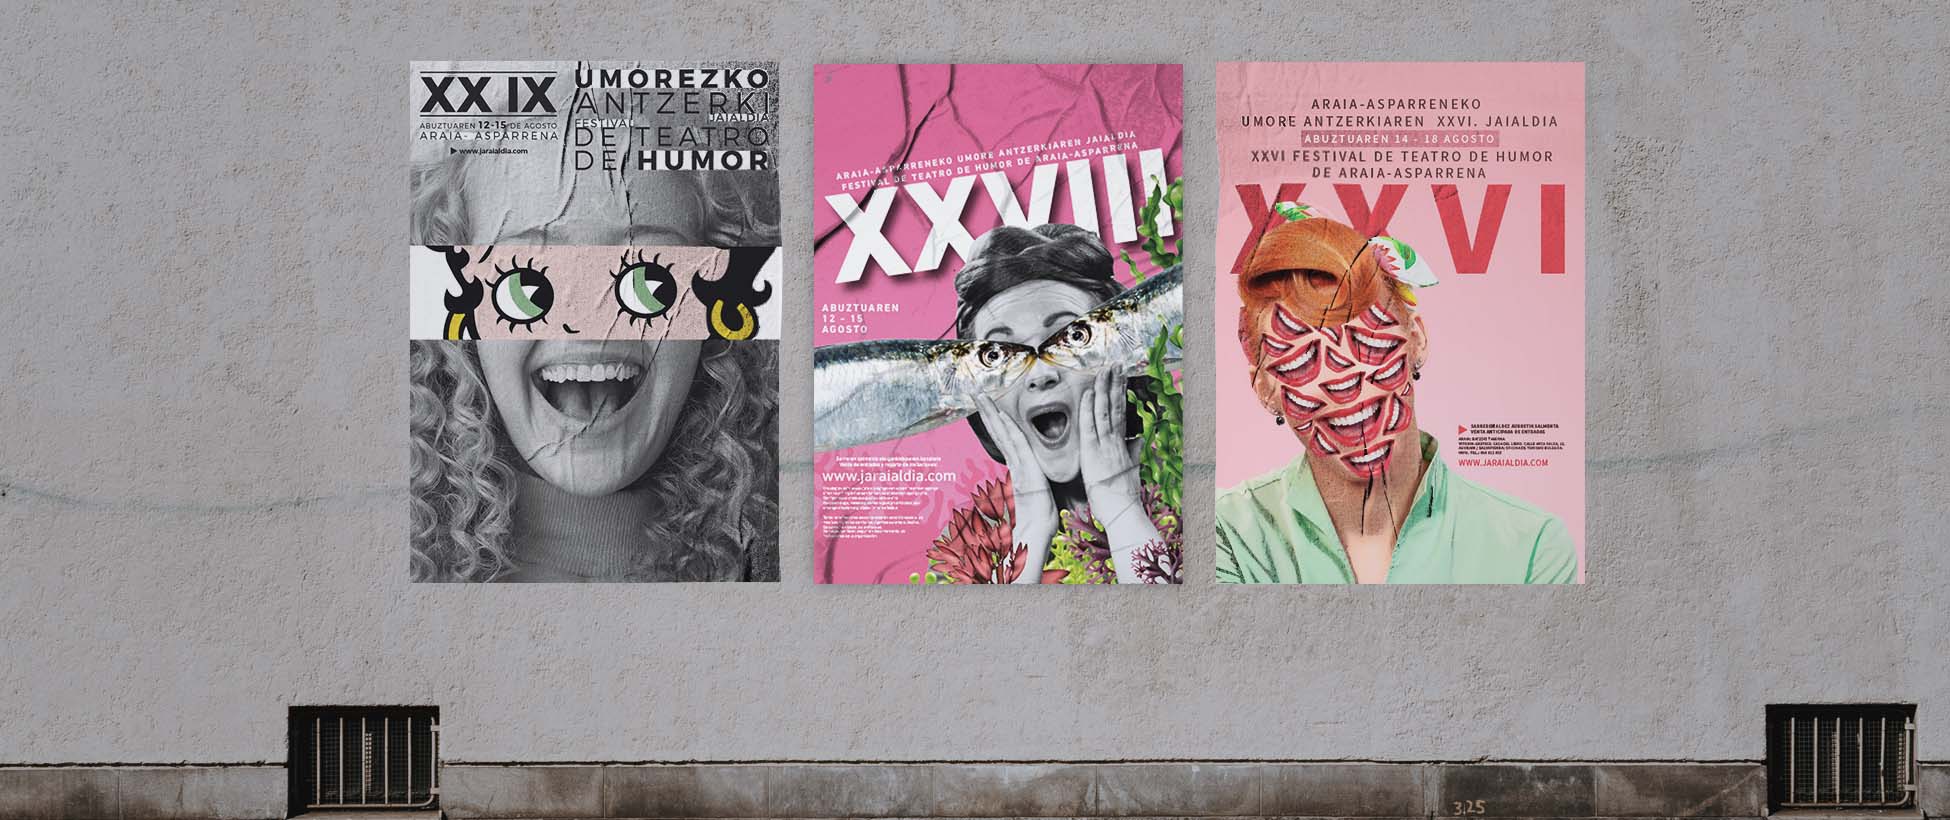 diseño de carteles para festivales, instituciones